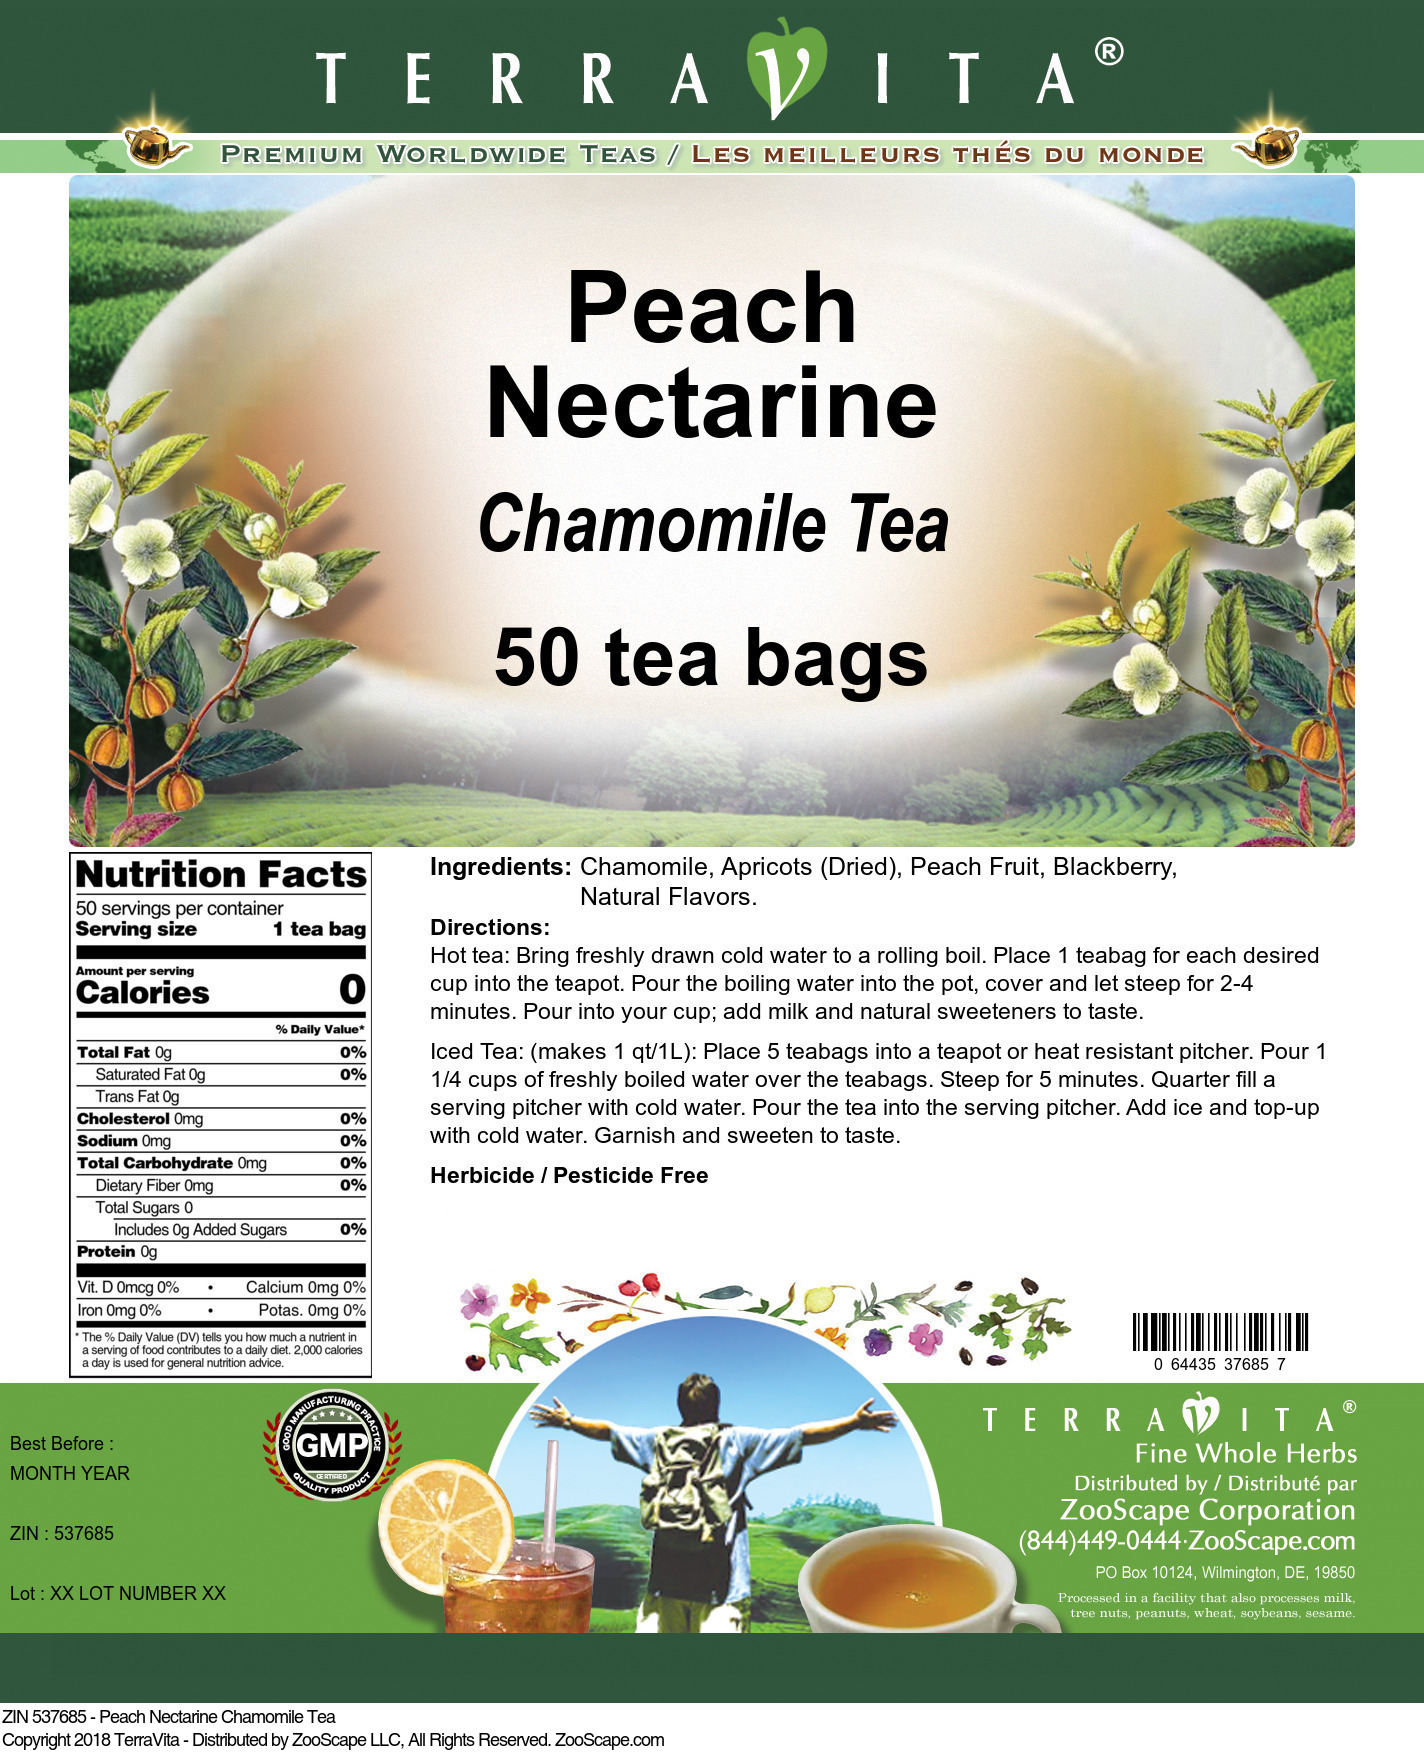 Peach Nectarine Chamomile Tea - Label